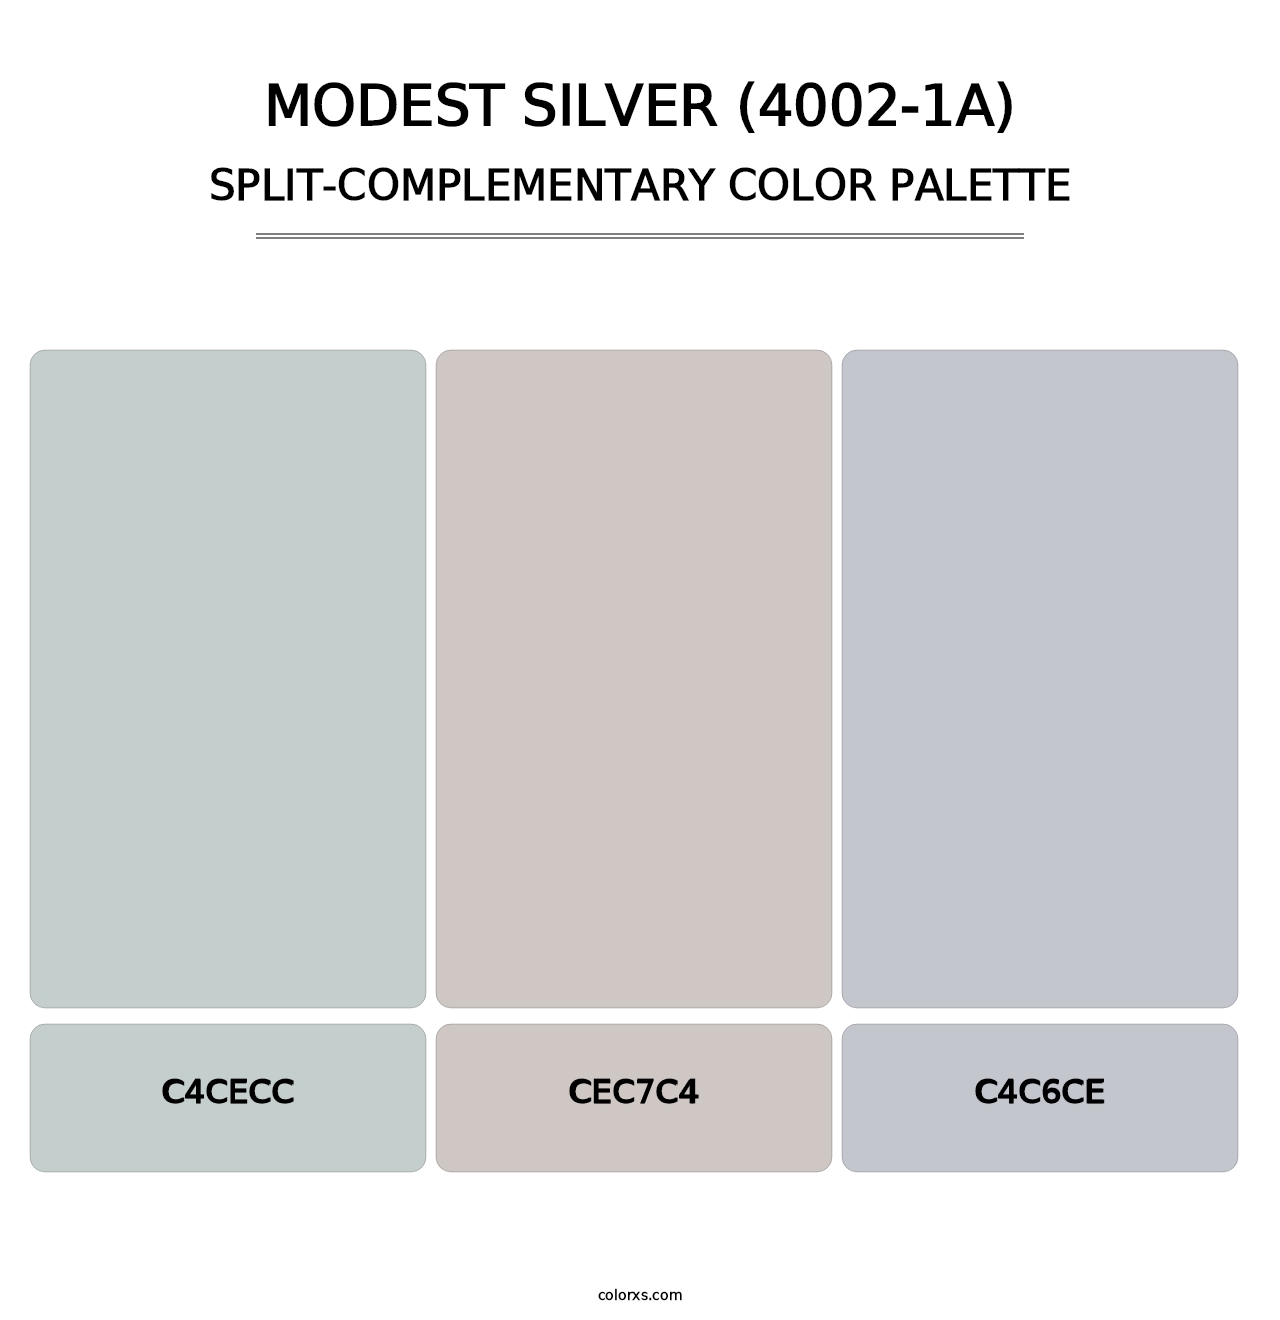 Modest Silver (4002-1A) - Split-Complementary Color Palette